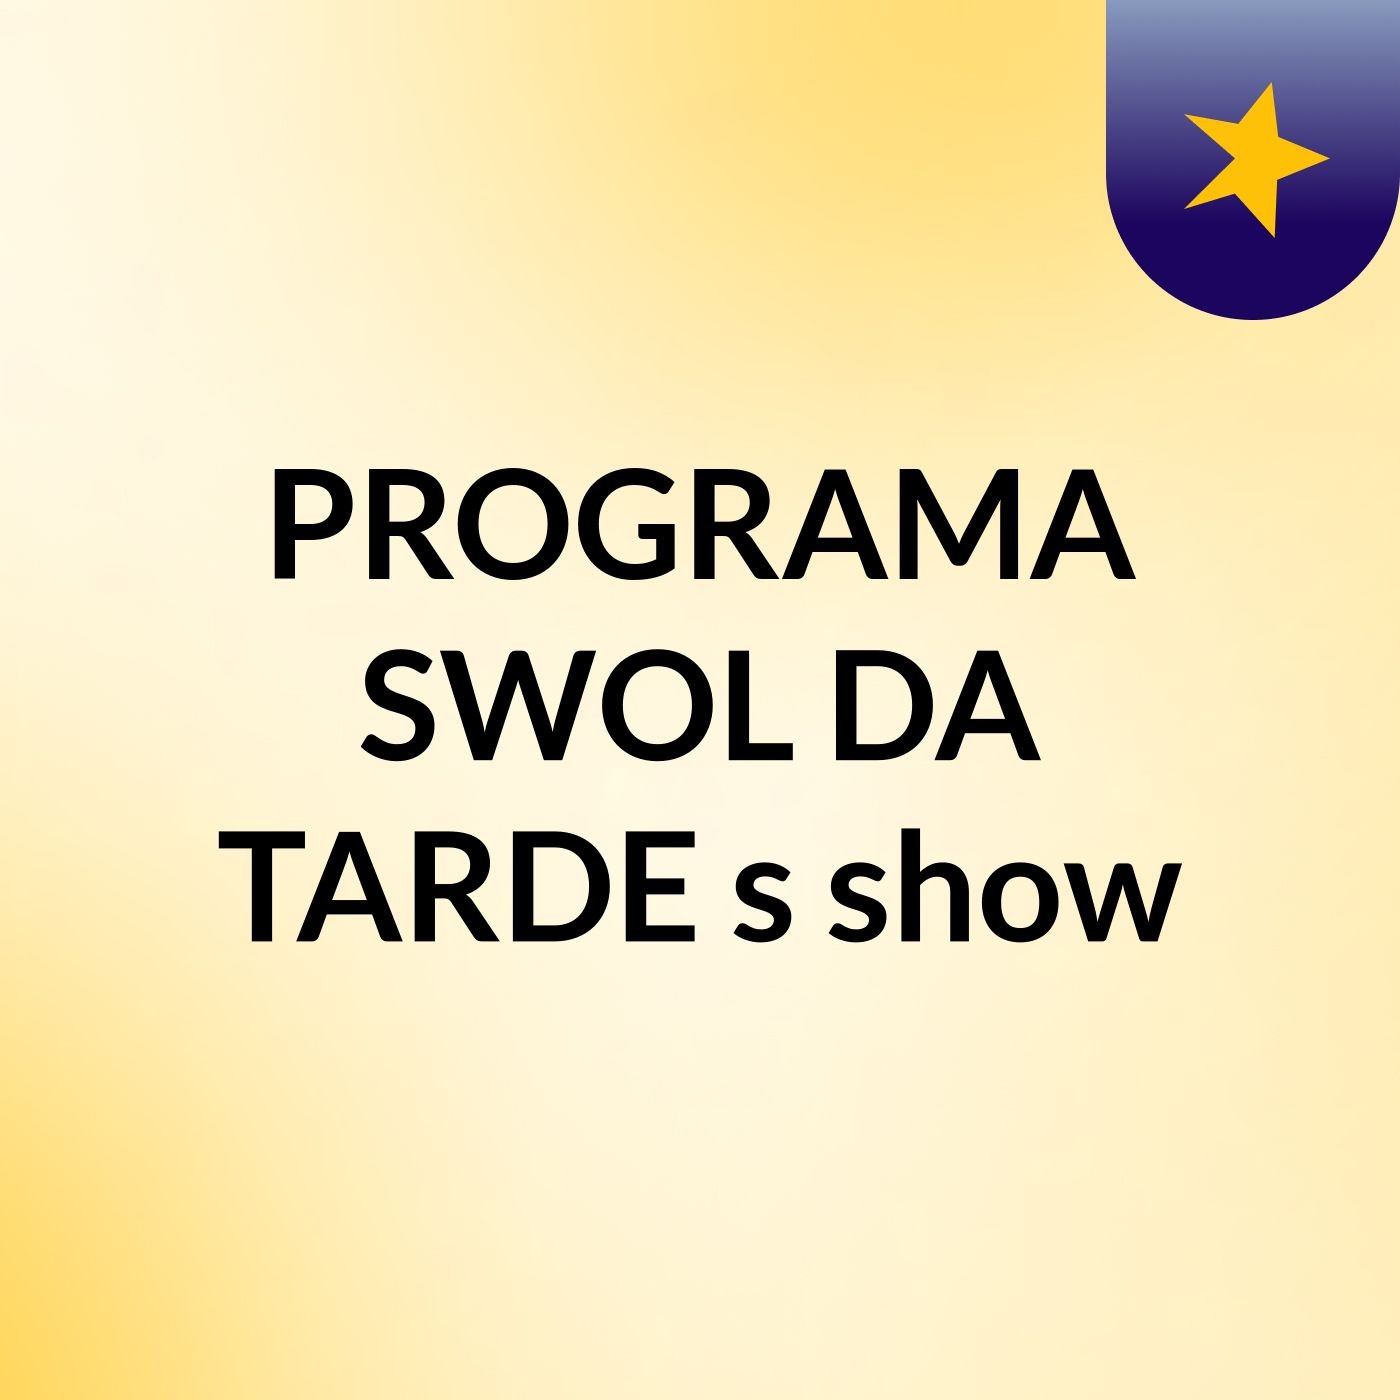 PROGRAMA SWOL DA TARDE's show